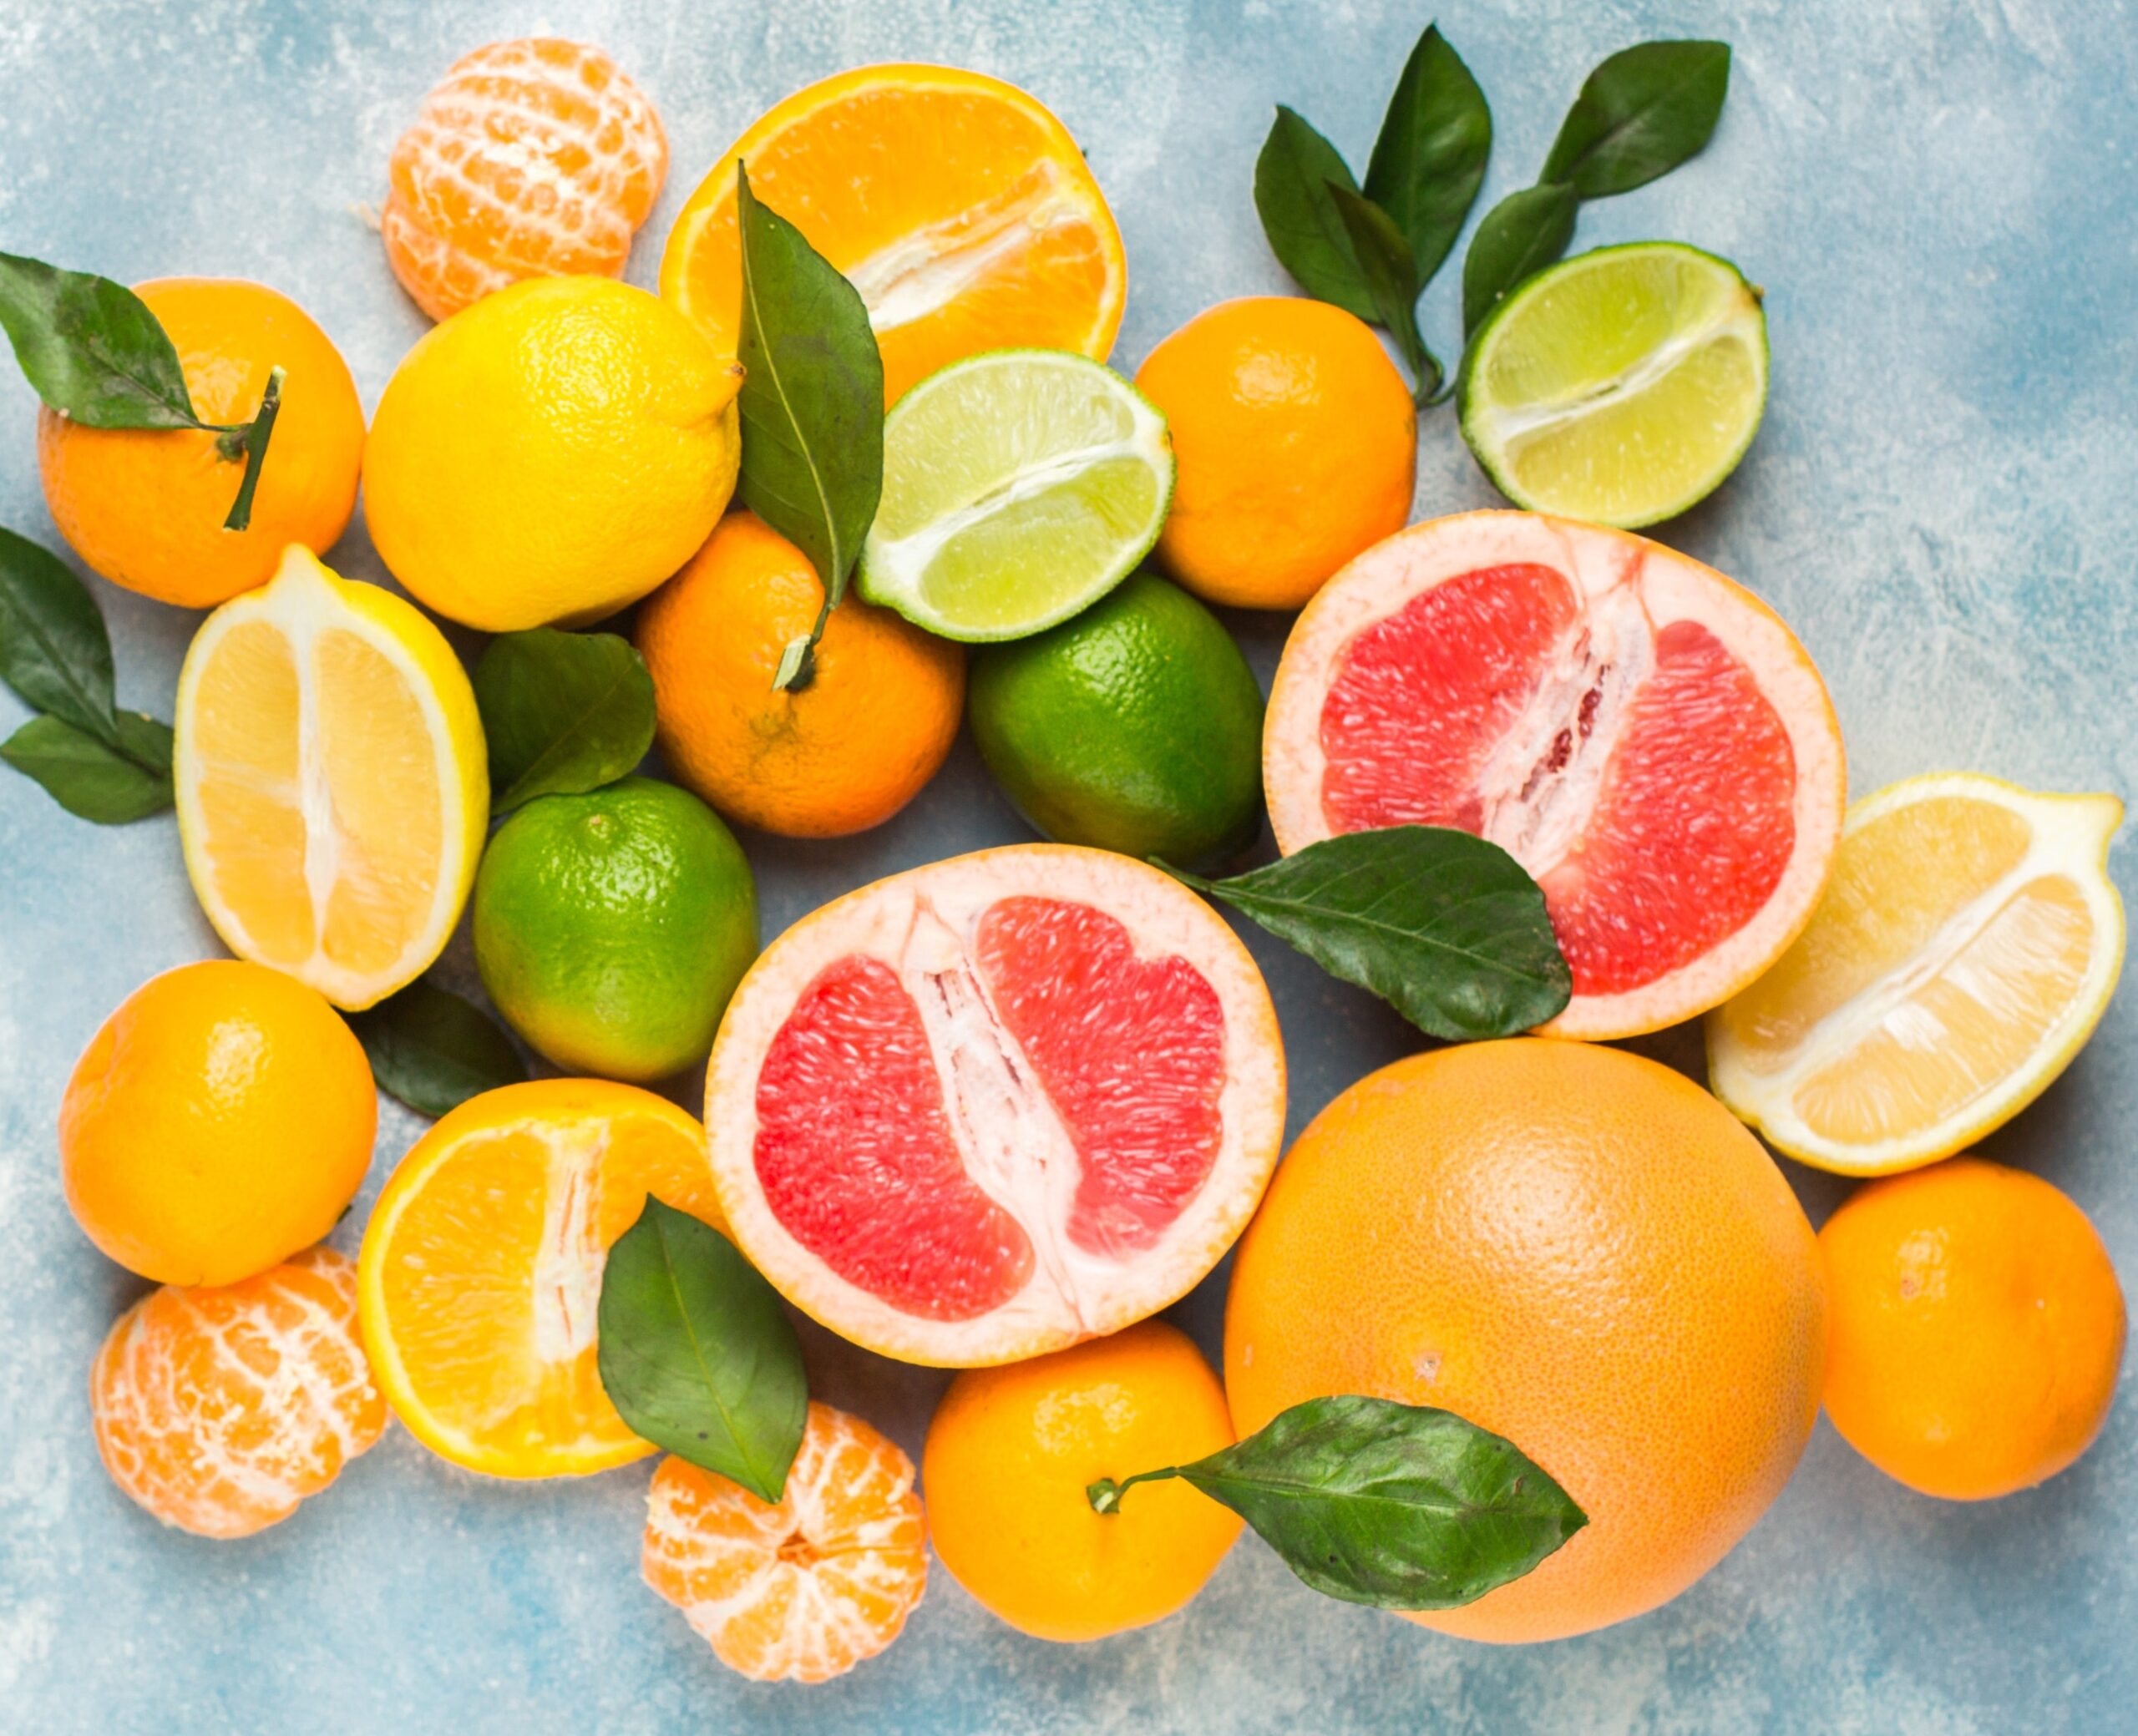 How does vitamin C boost immunity?